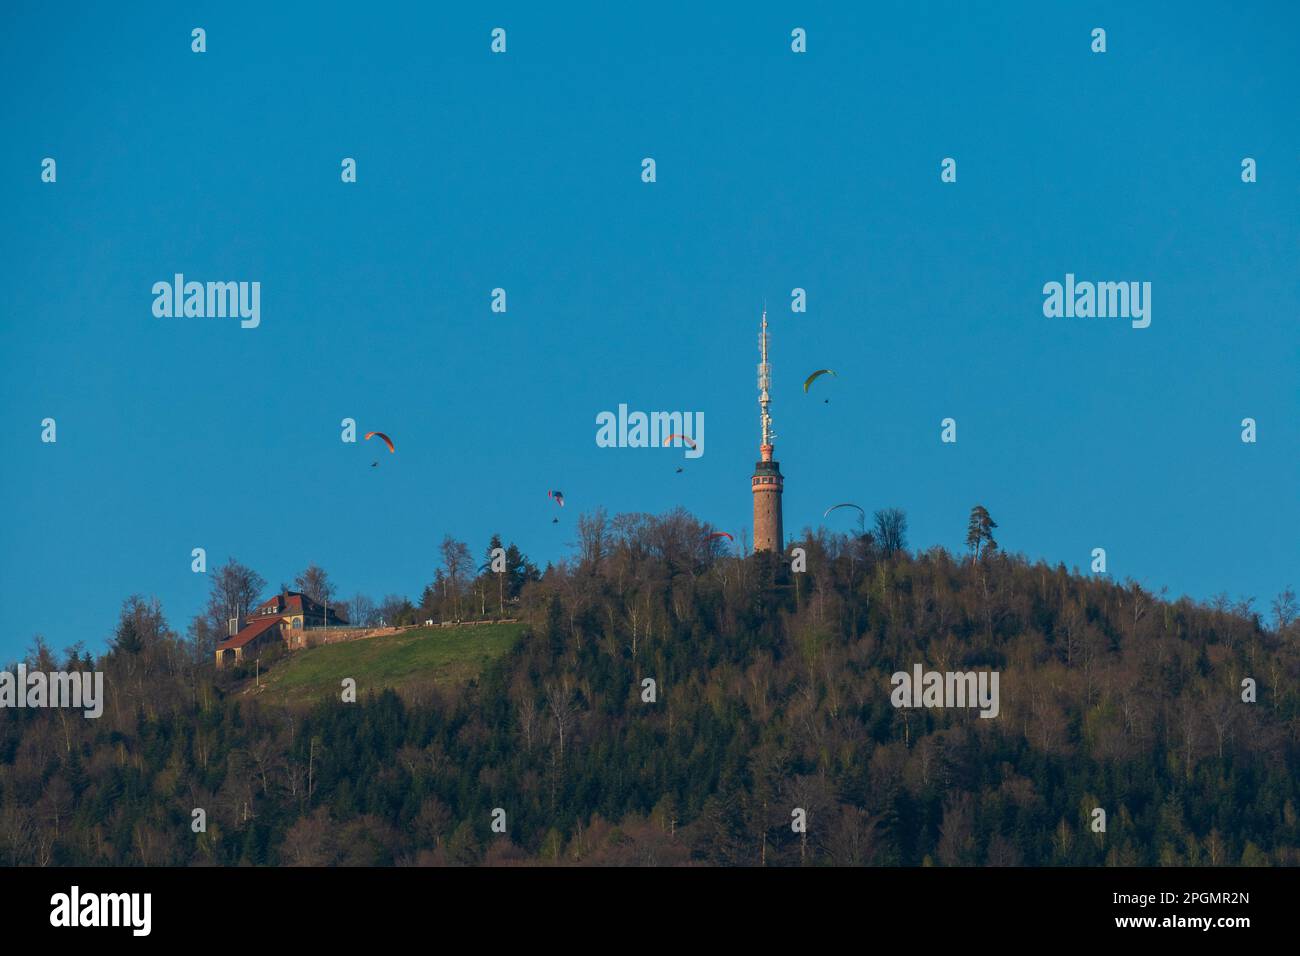 Gleitschirmflieger über dem historischen Merkur Turm Baden-Baden Foto Stock